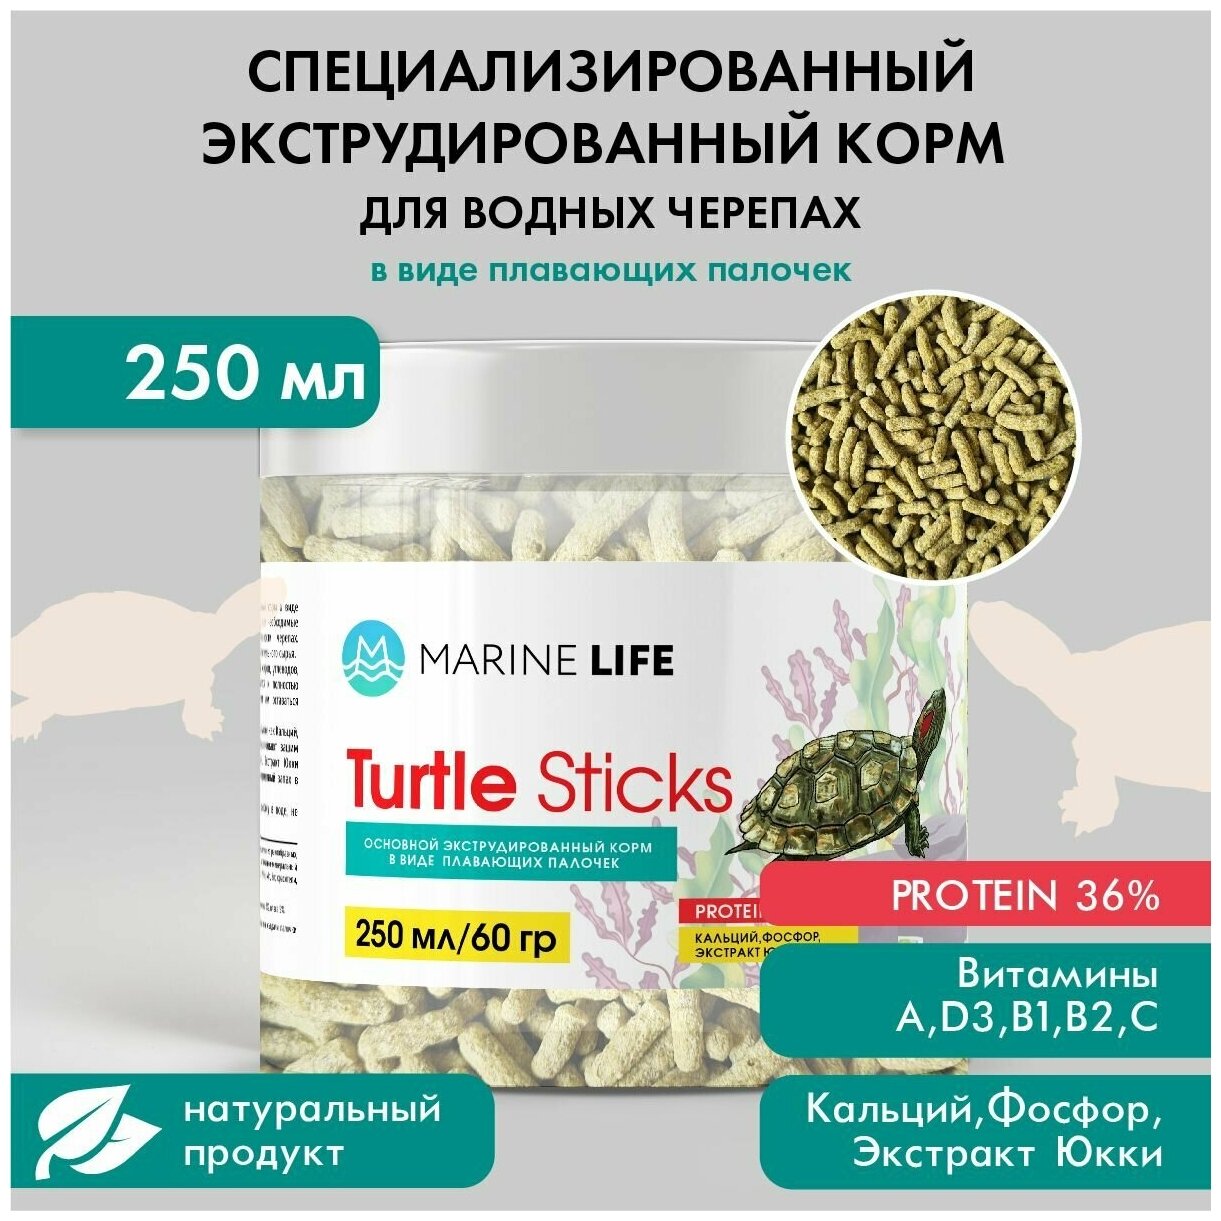 Корм для водных черепах Marine Life Turtle Sticks, 250 мл/60гр - фотография № 1